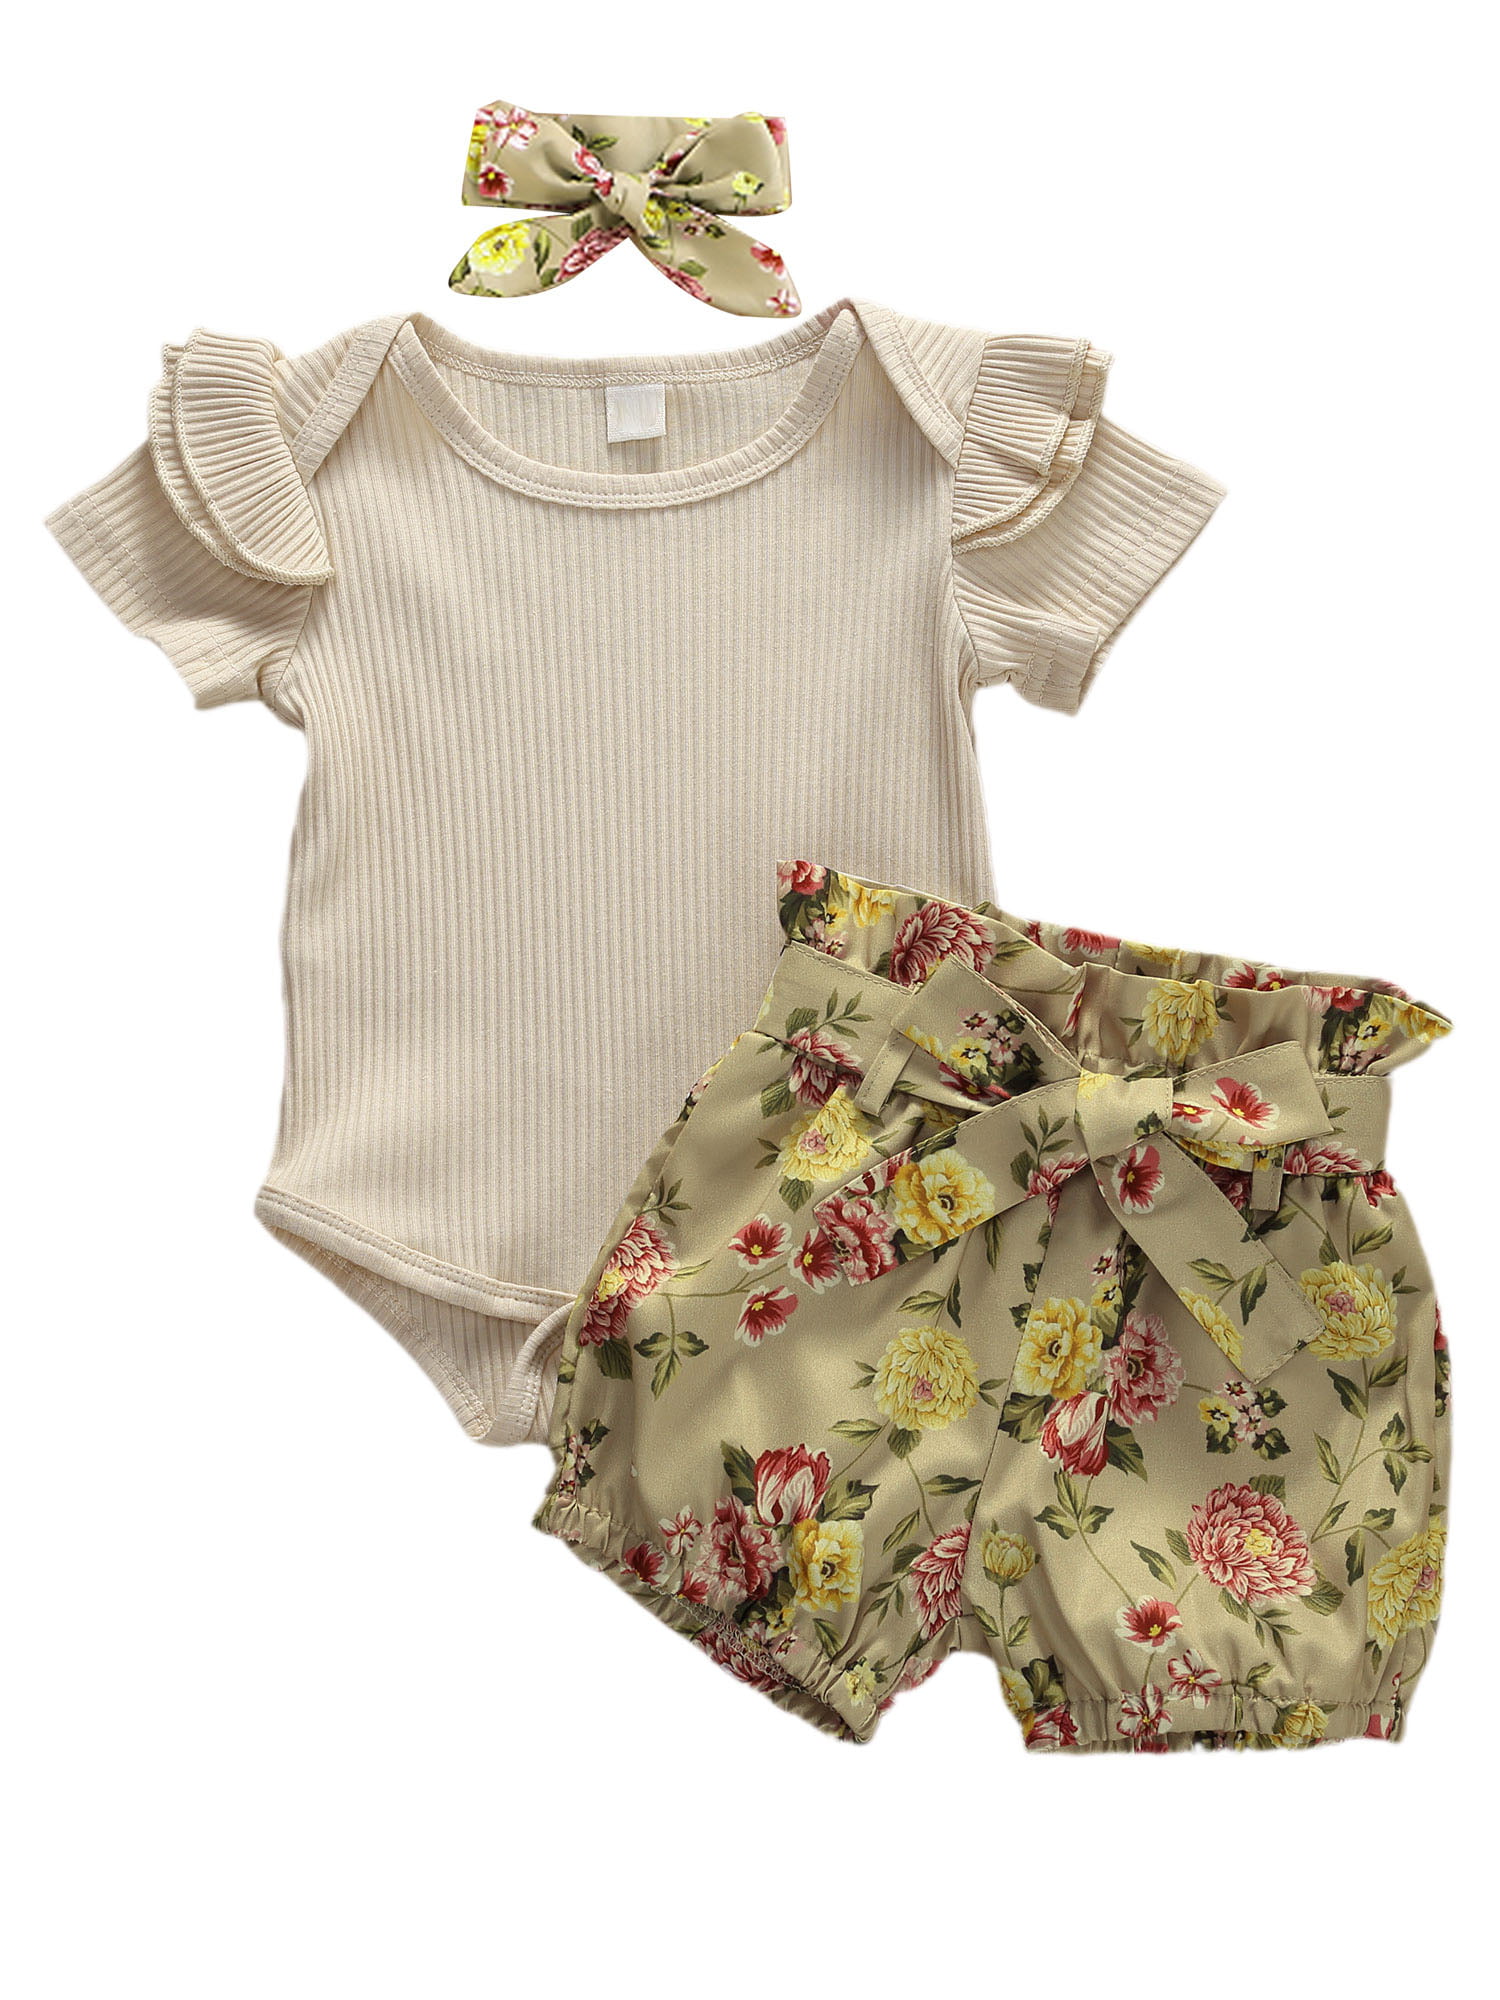 Toddler Newborn Baby Girl Floral Romper Bodysuit Jumpsuit Outfit Sunsuit Clothes